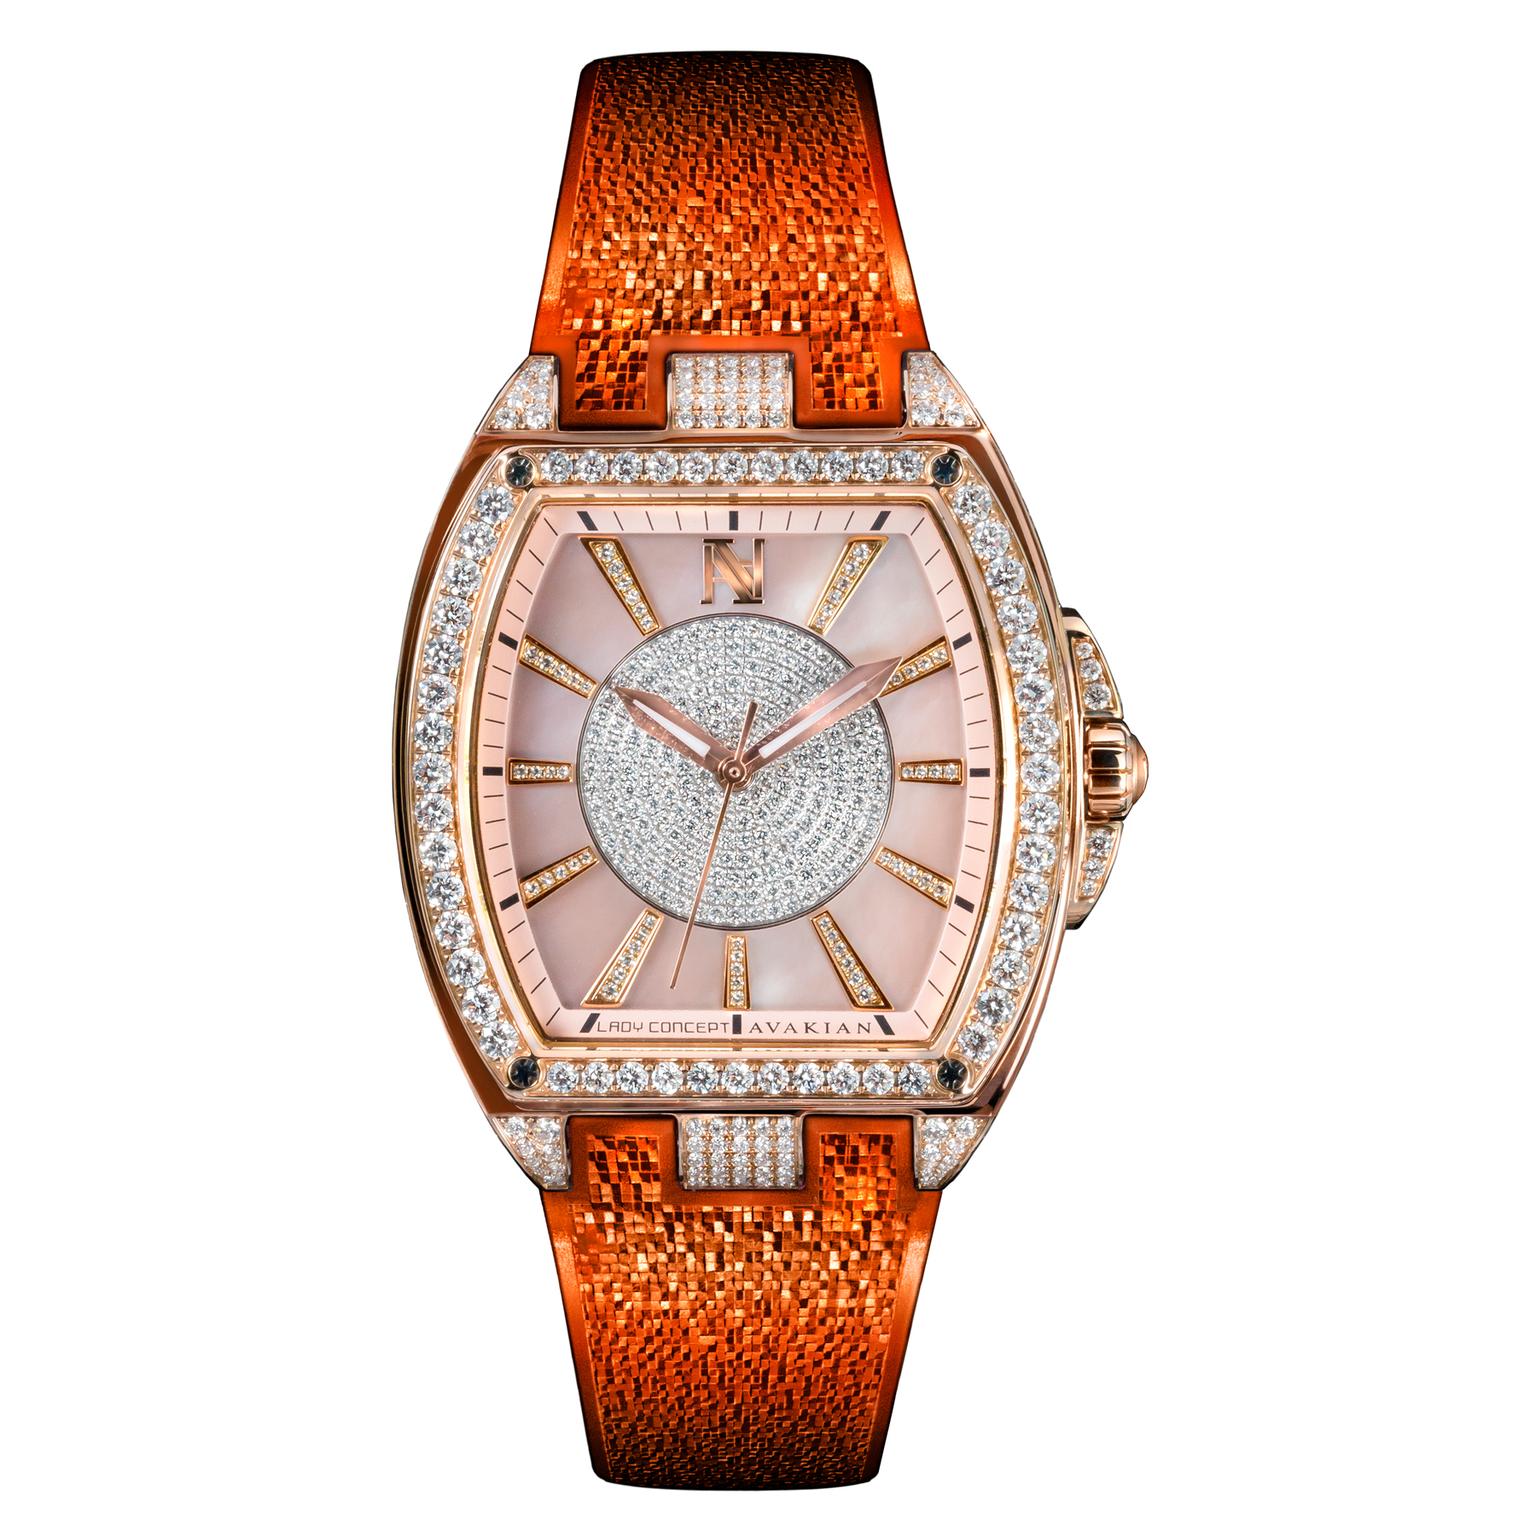 Avakian Lady Concept Orange watch